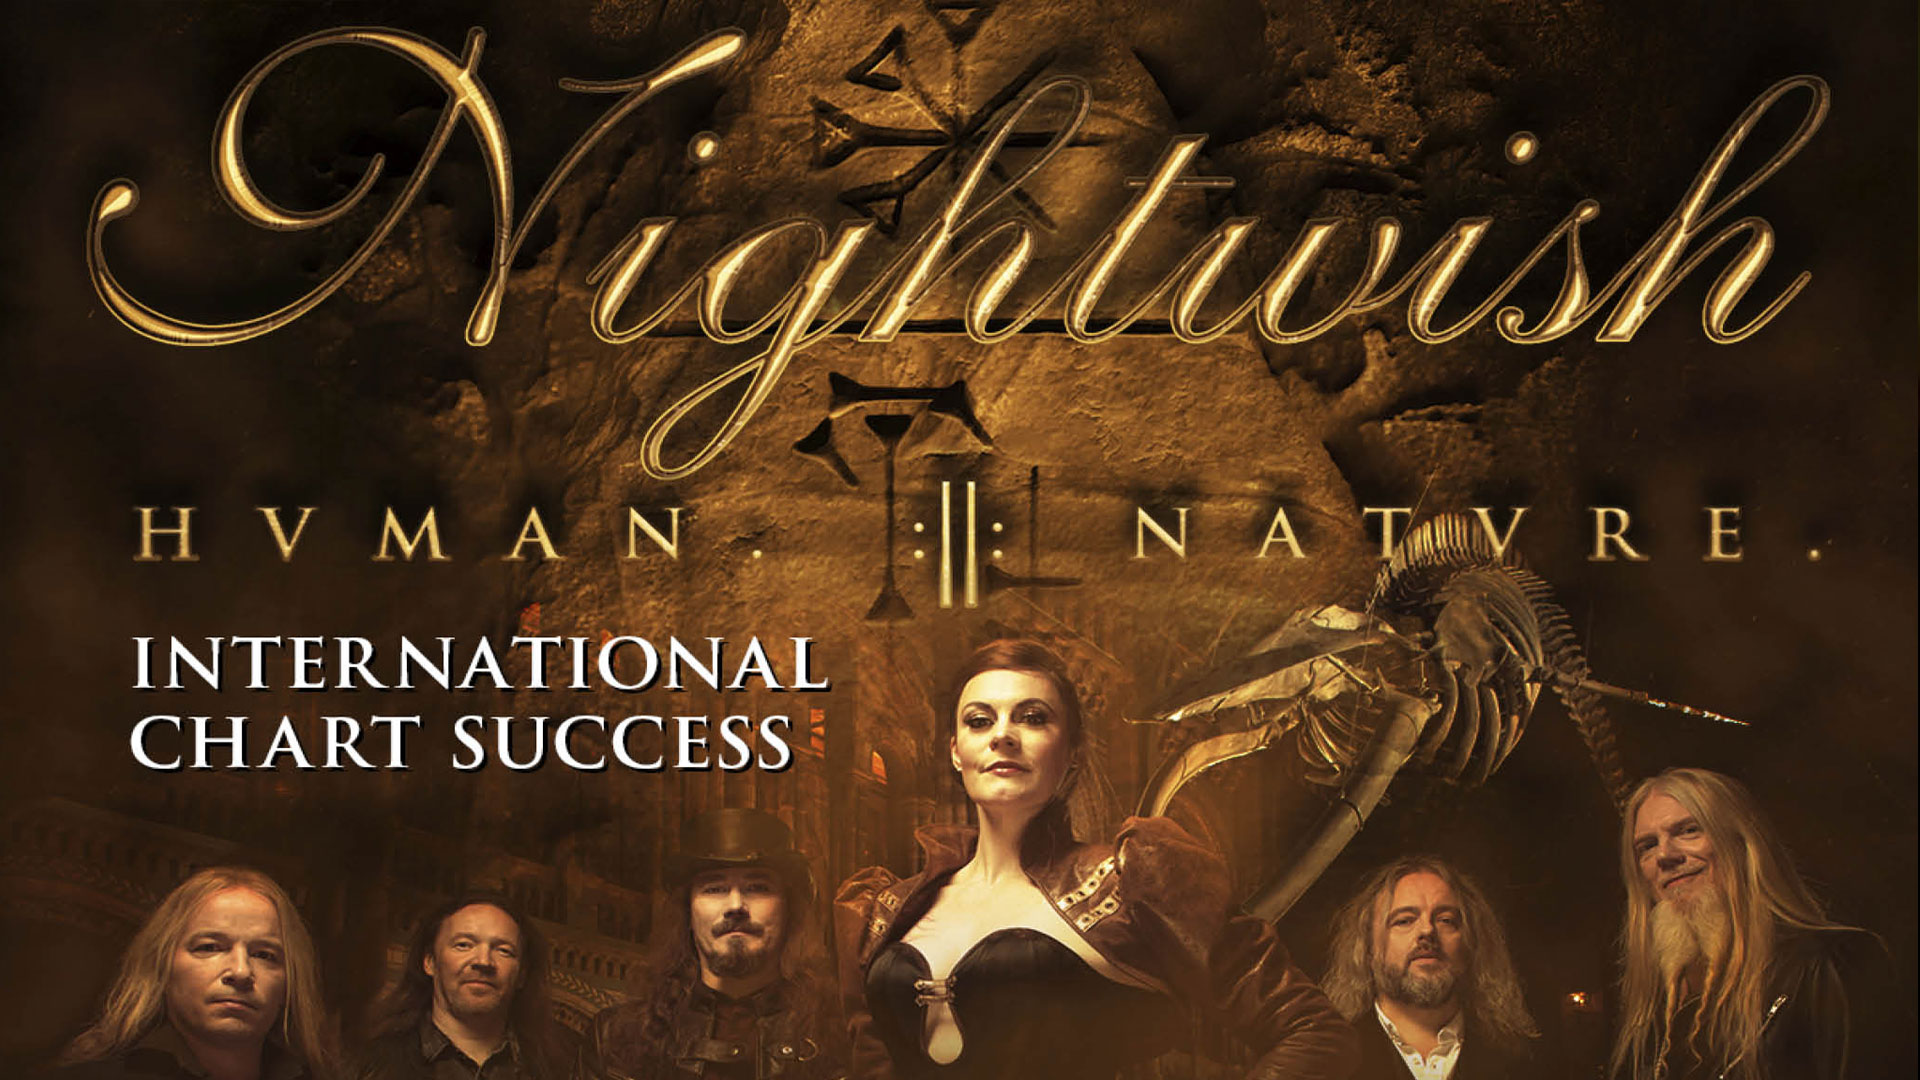 nightwish tour statistics